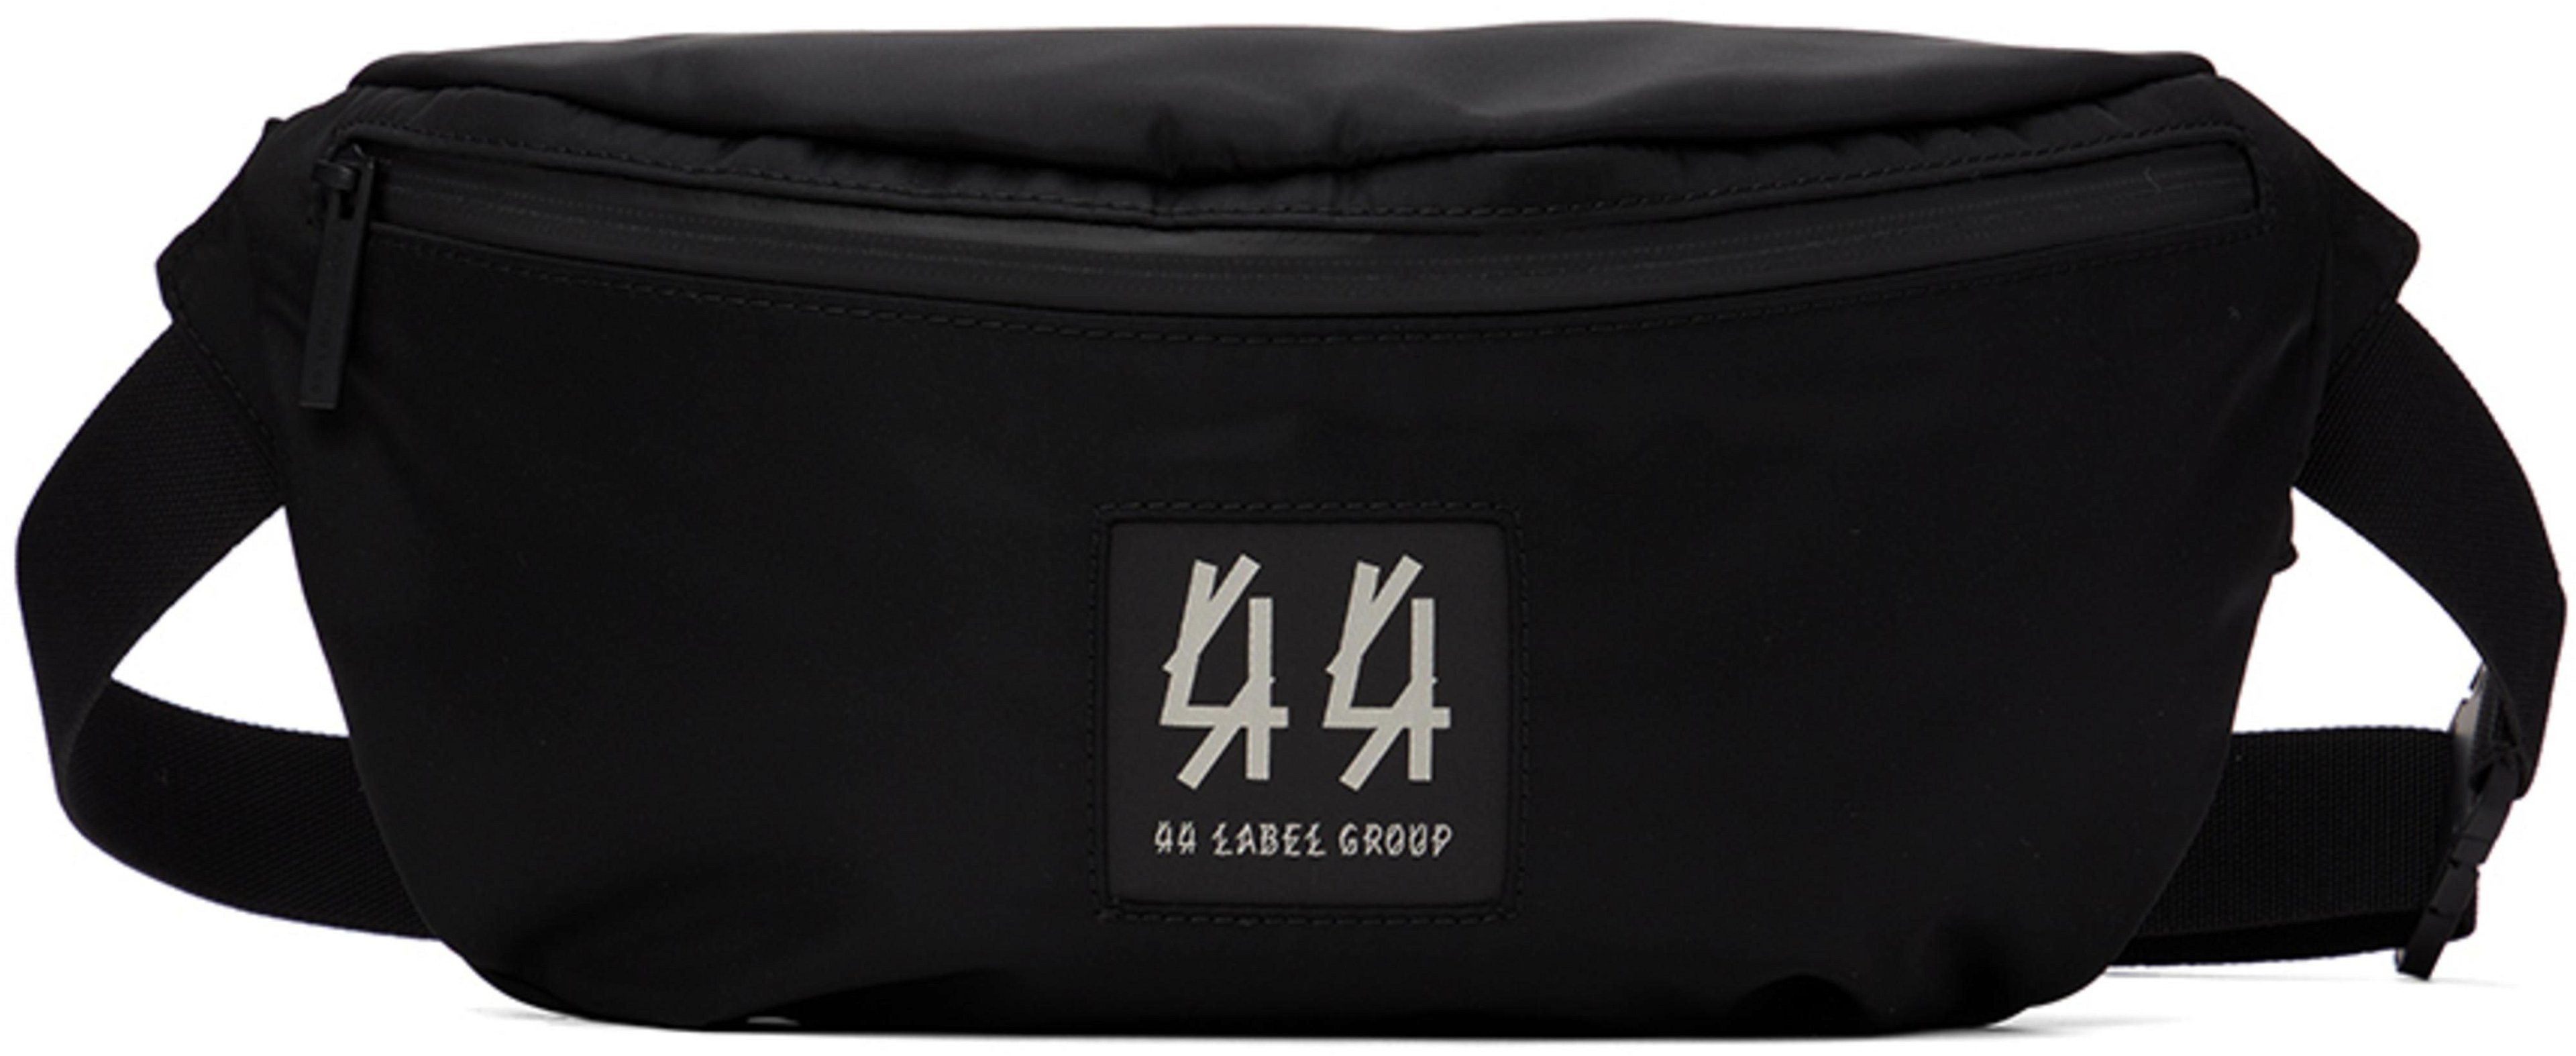 Black Tech Belt Bag by 44 LABEL GROUP